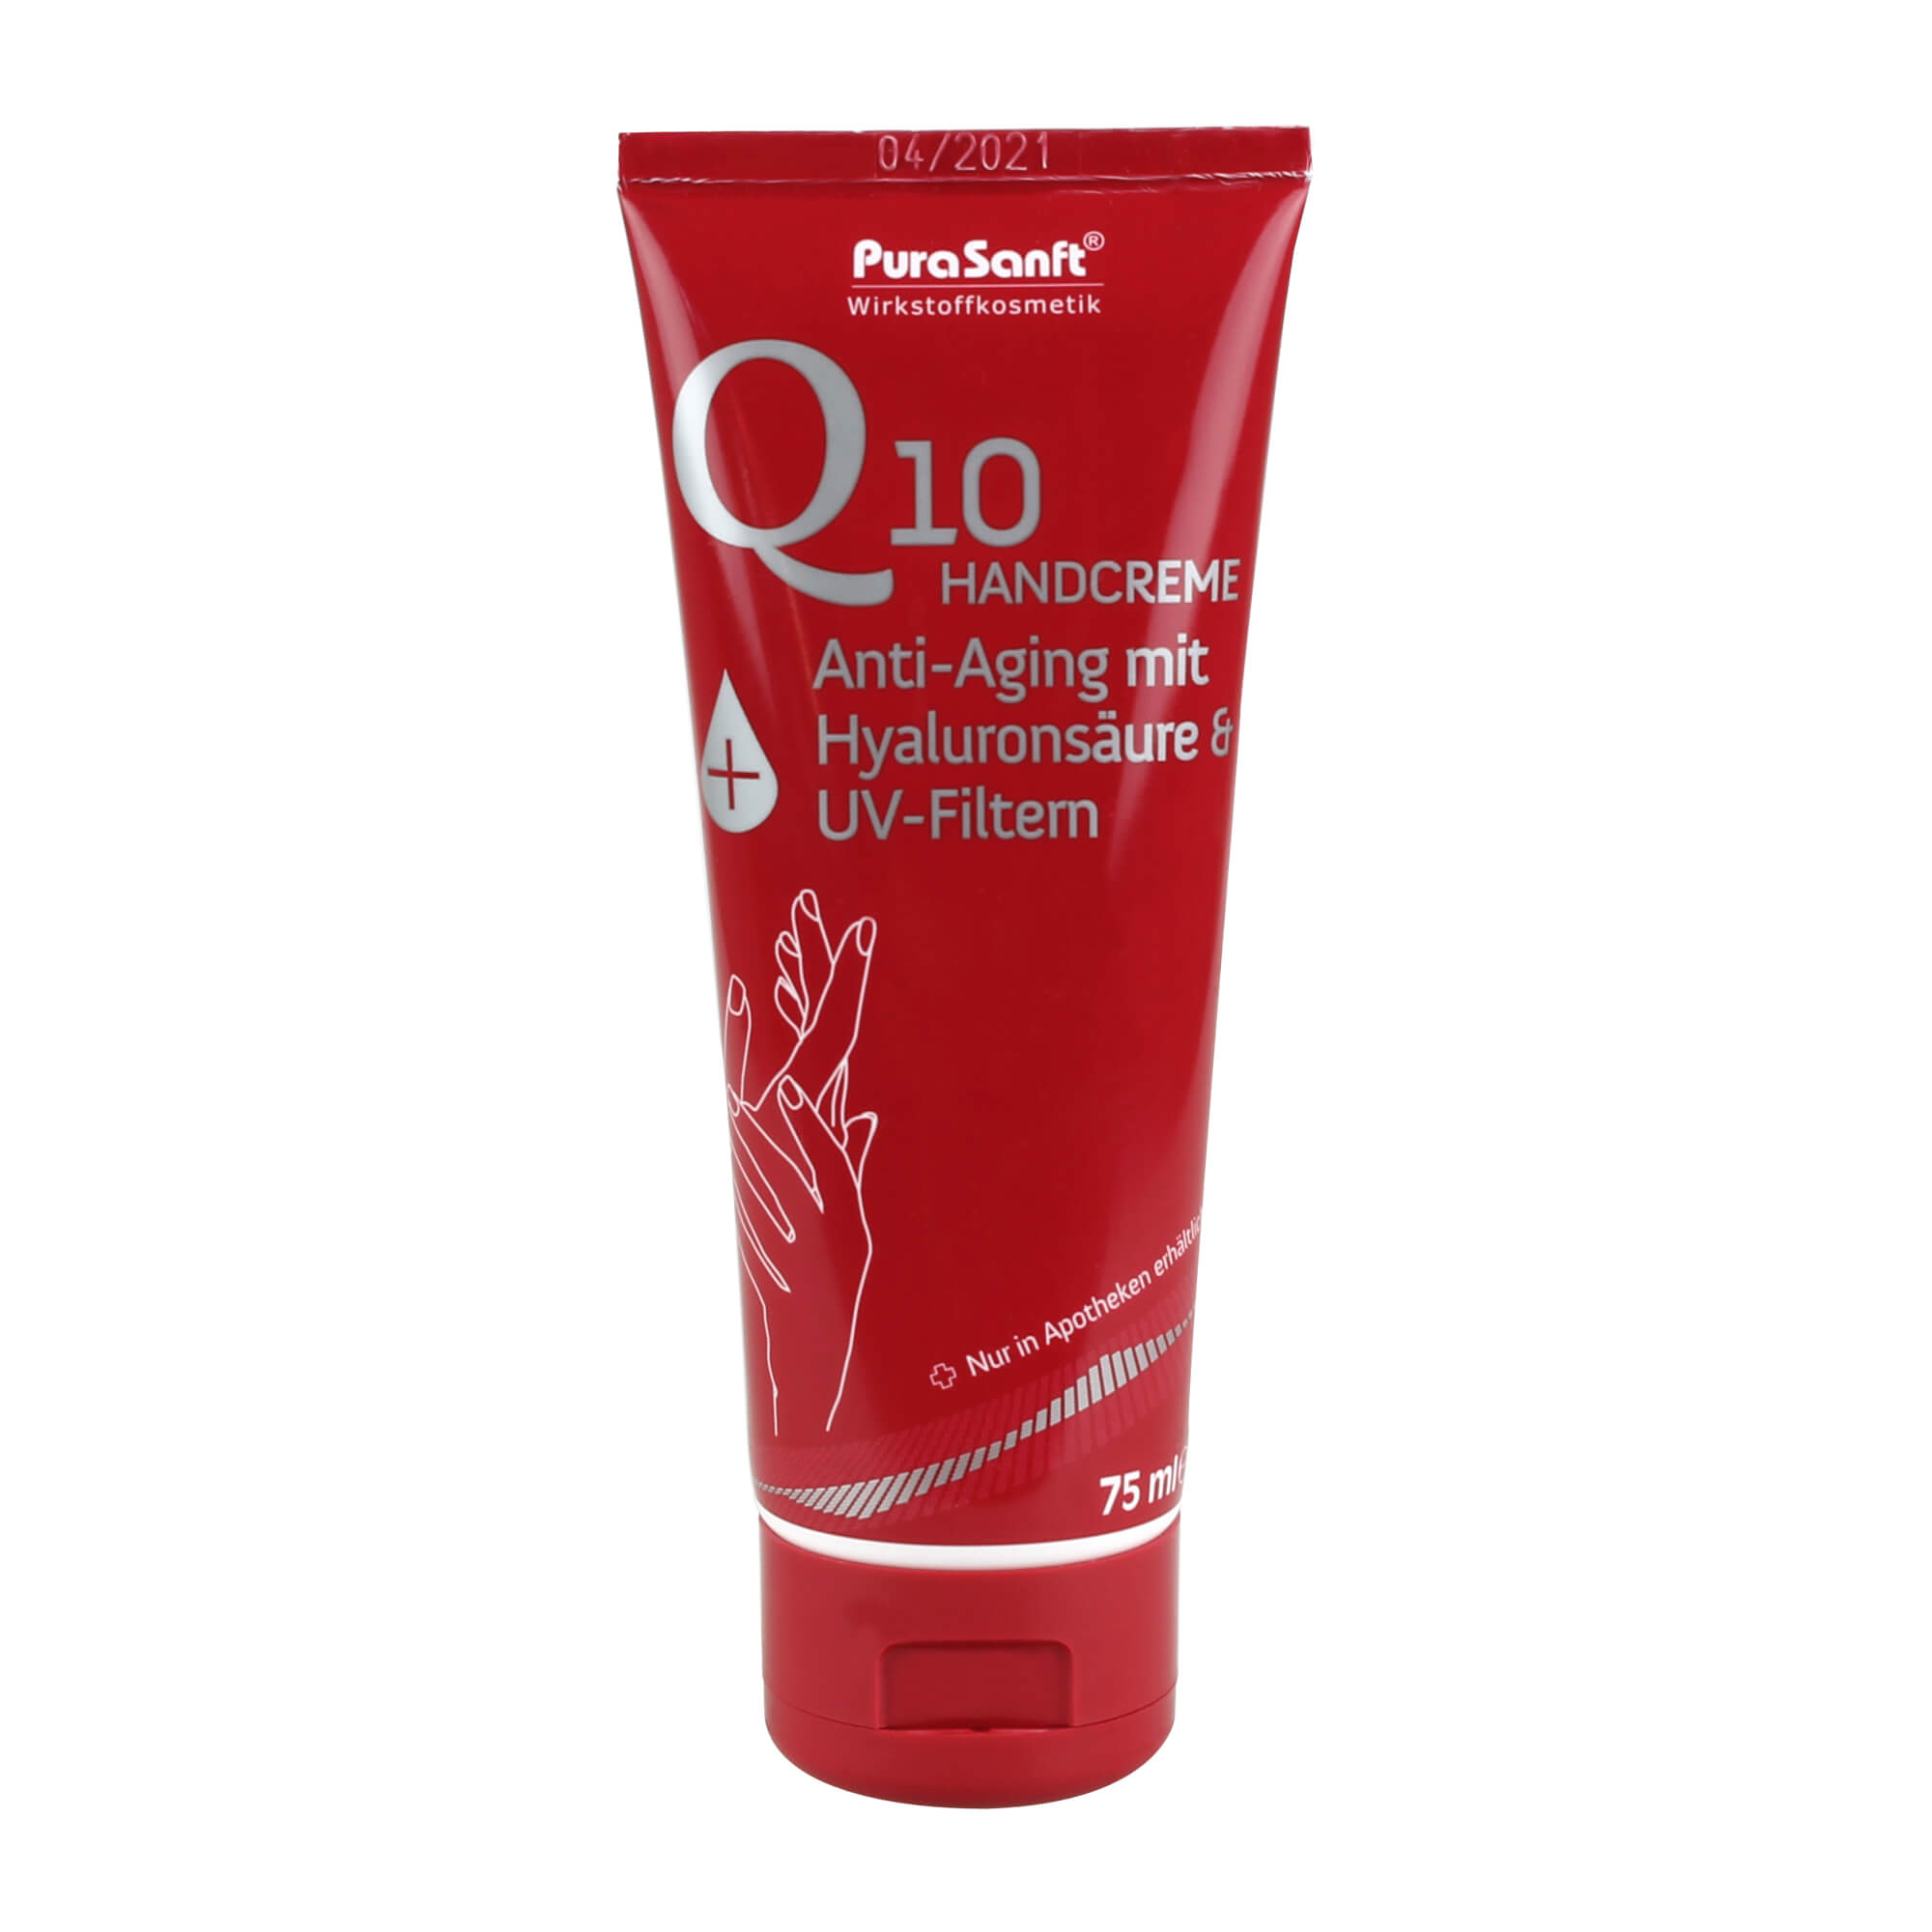 Q10 Handcreme Anti-Aging mit Hyaloronsäure & UV-Filtern.